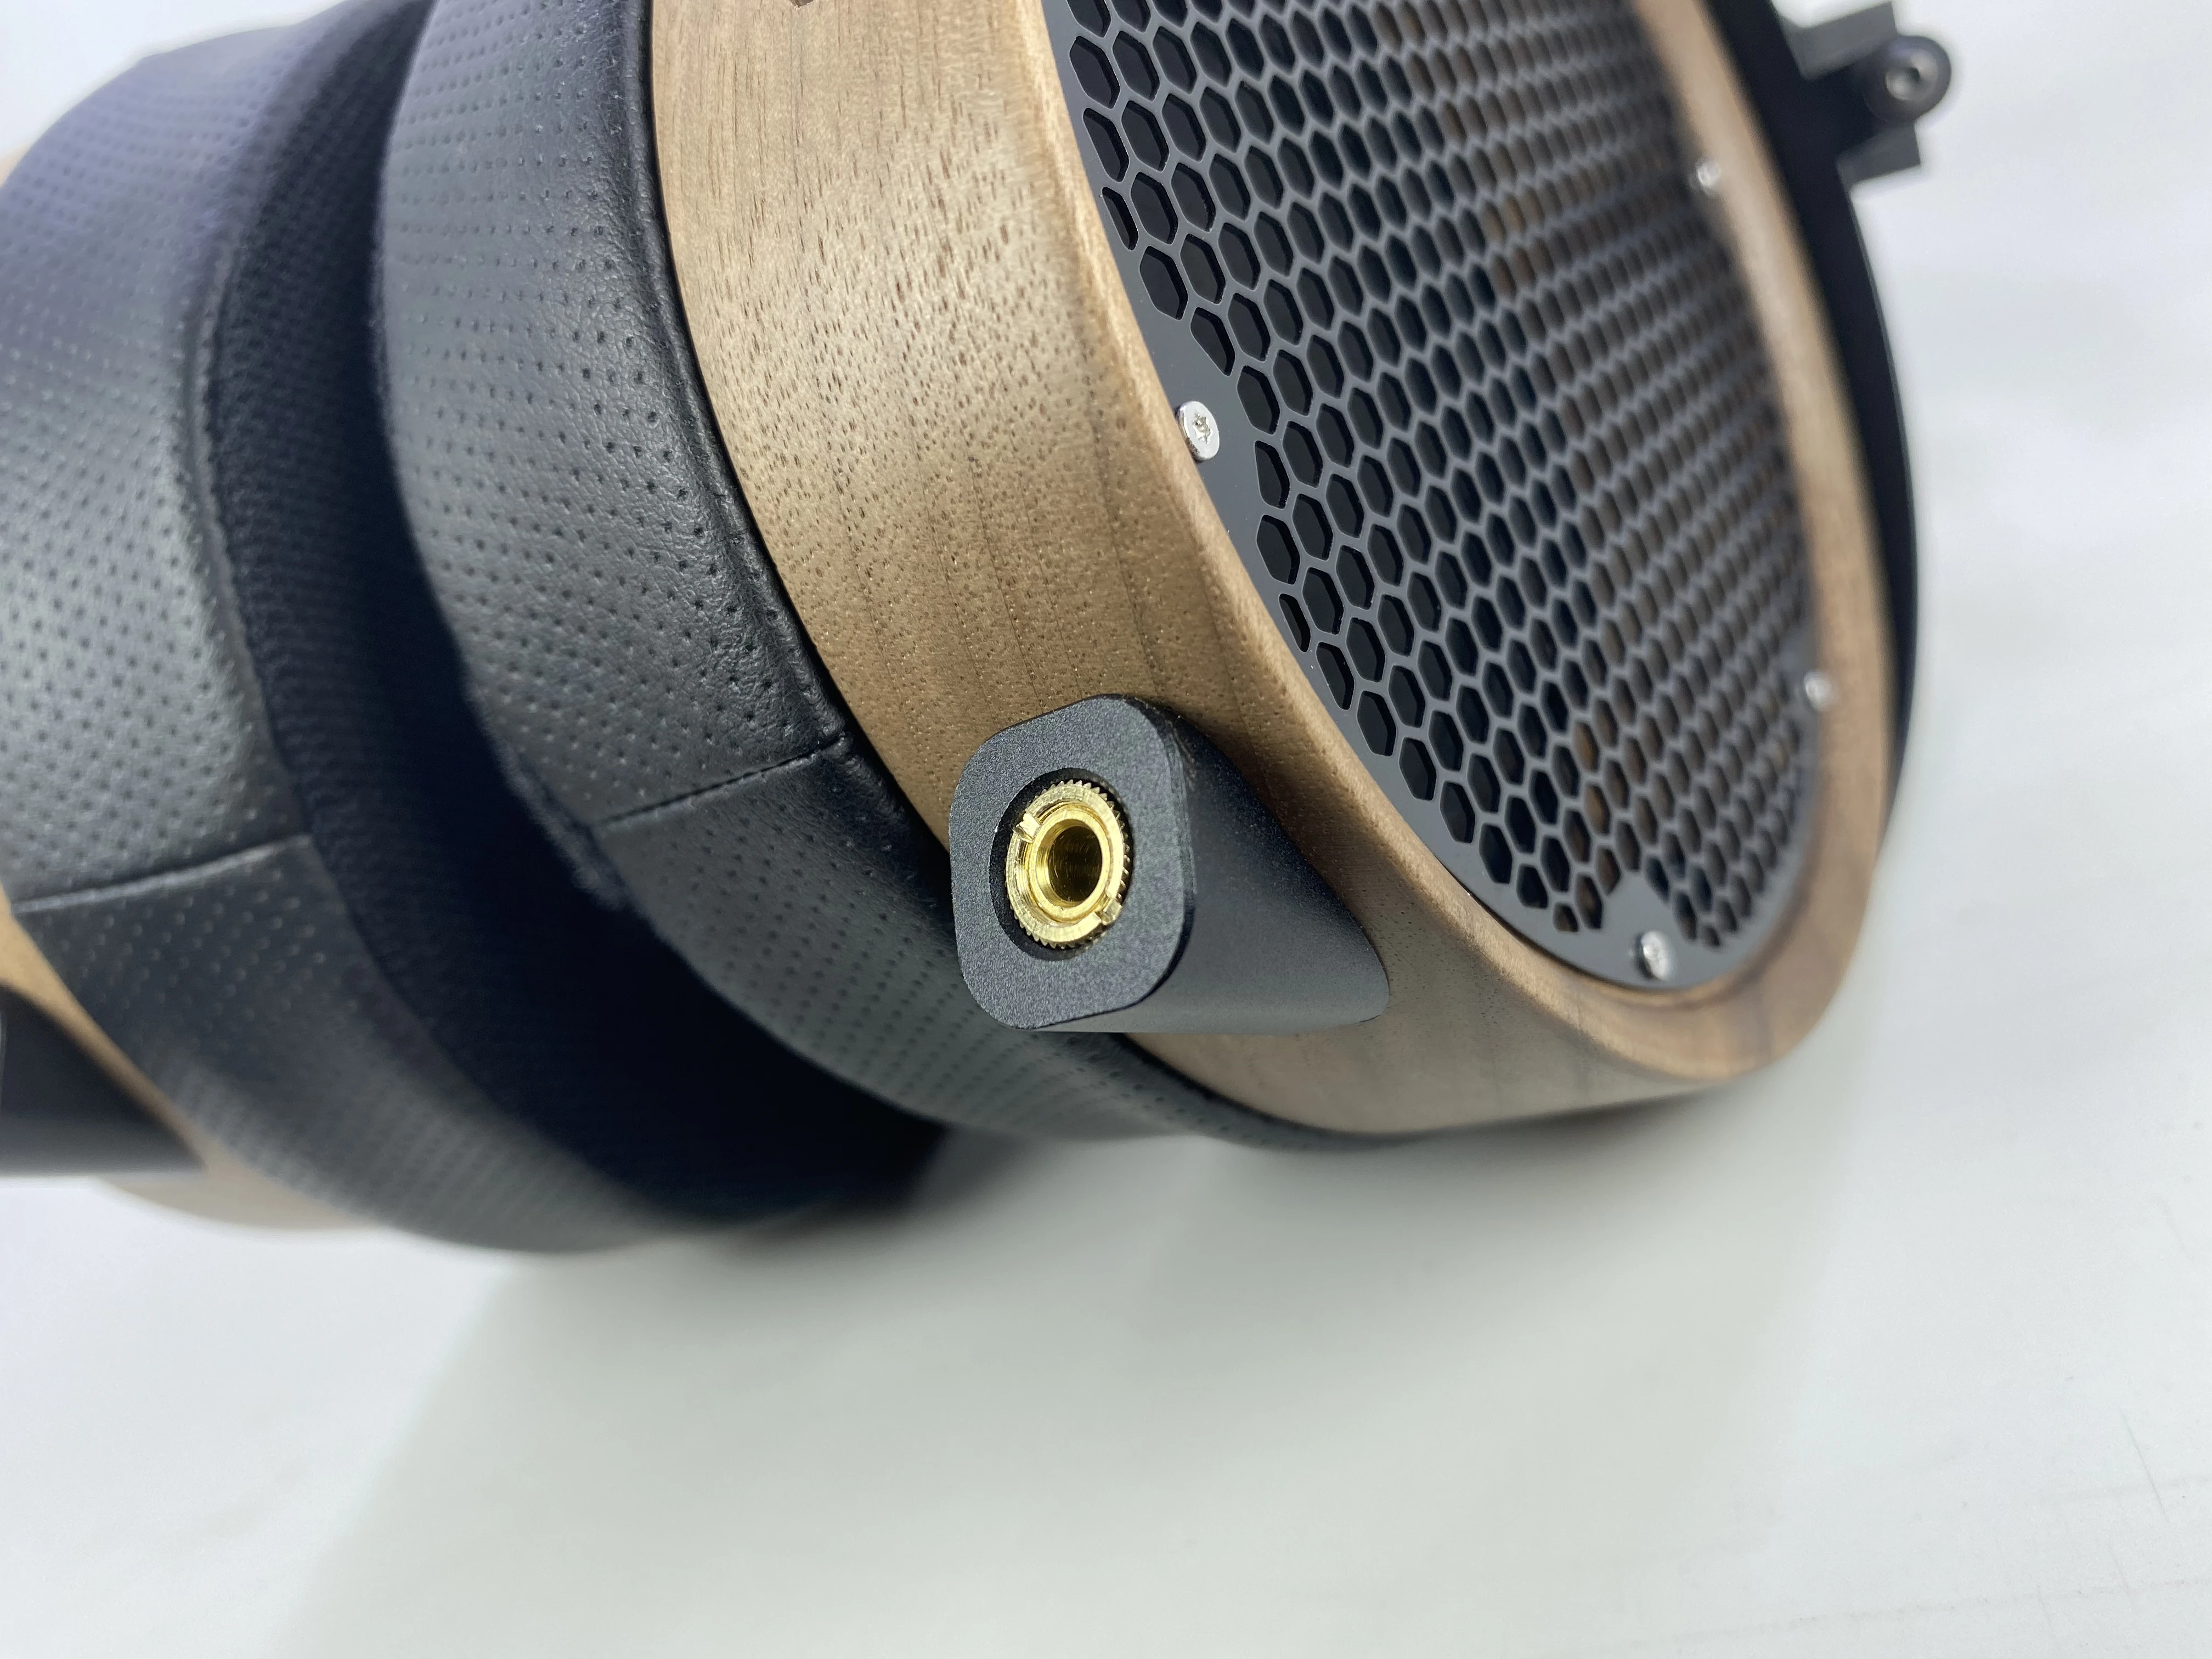 DIY wood headphone 70mm driver balance sound popular vocals